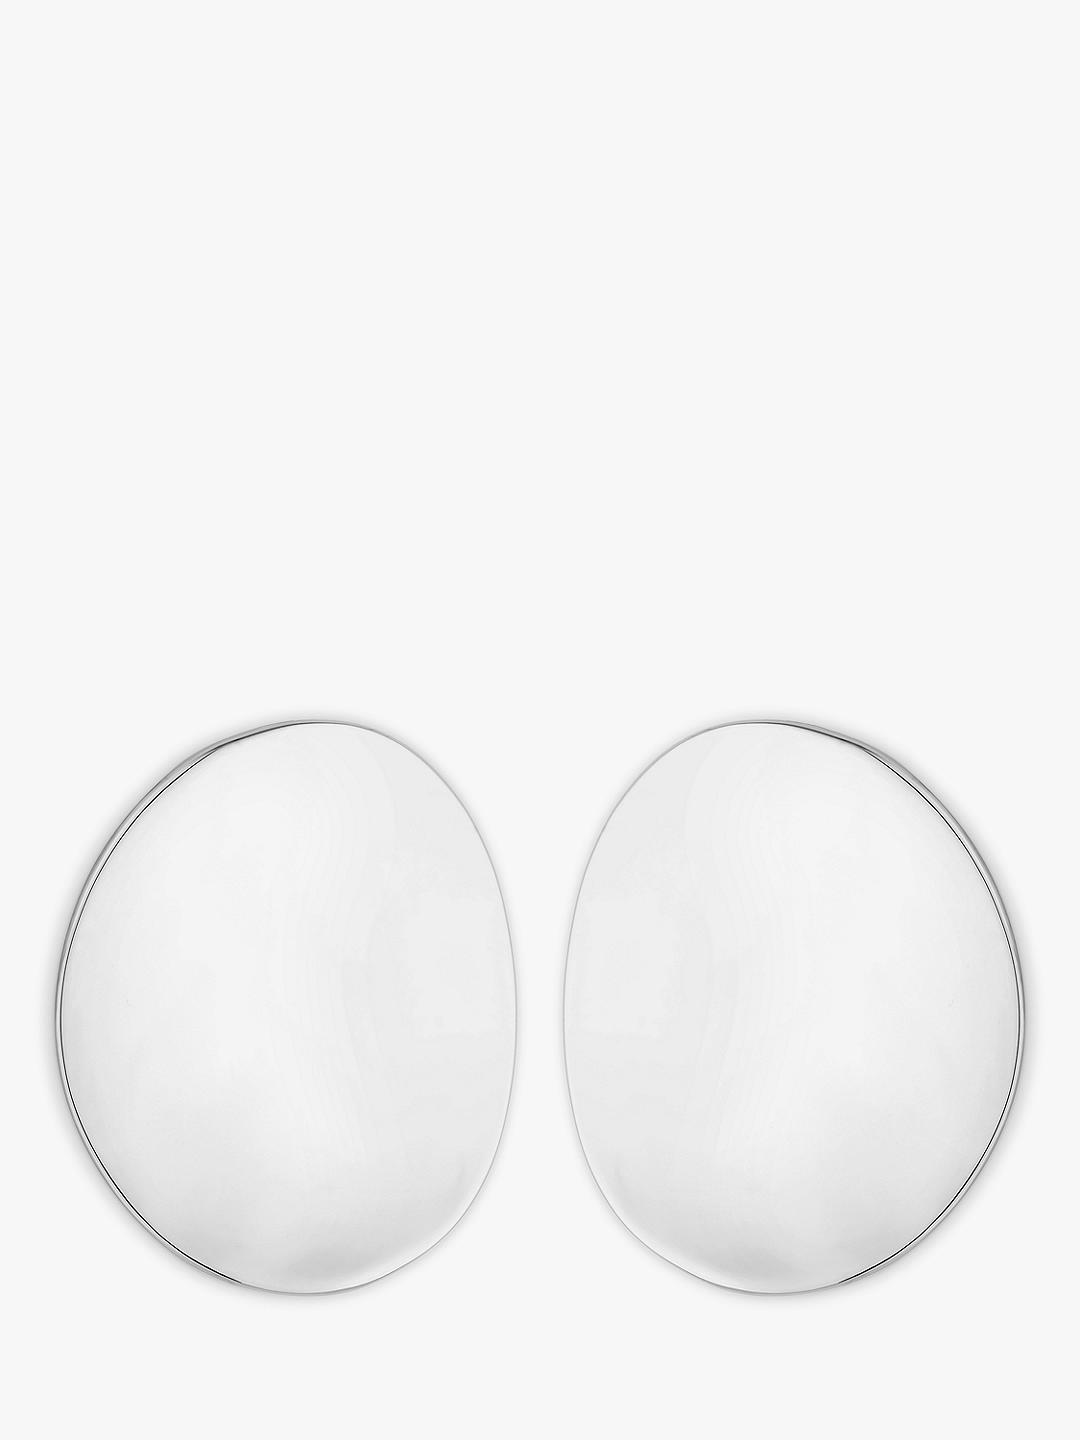 Jon Richard Rhodium Plated Oversized Stud Earrings, Silver